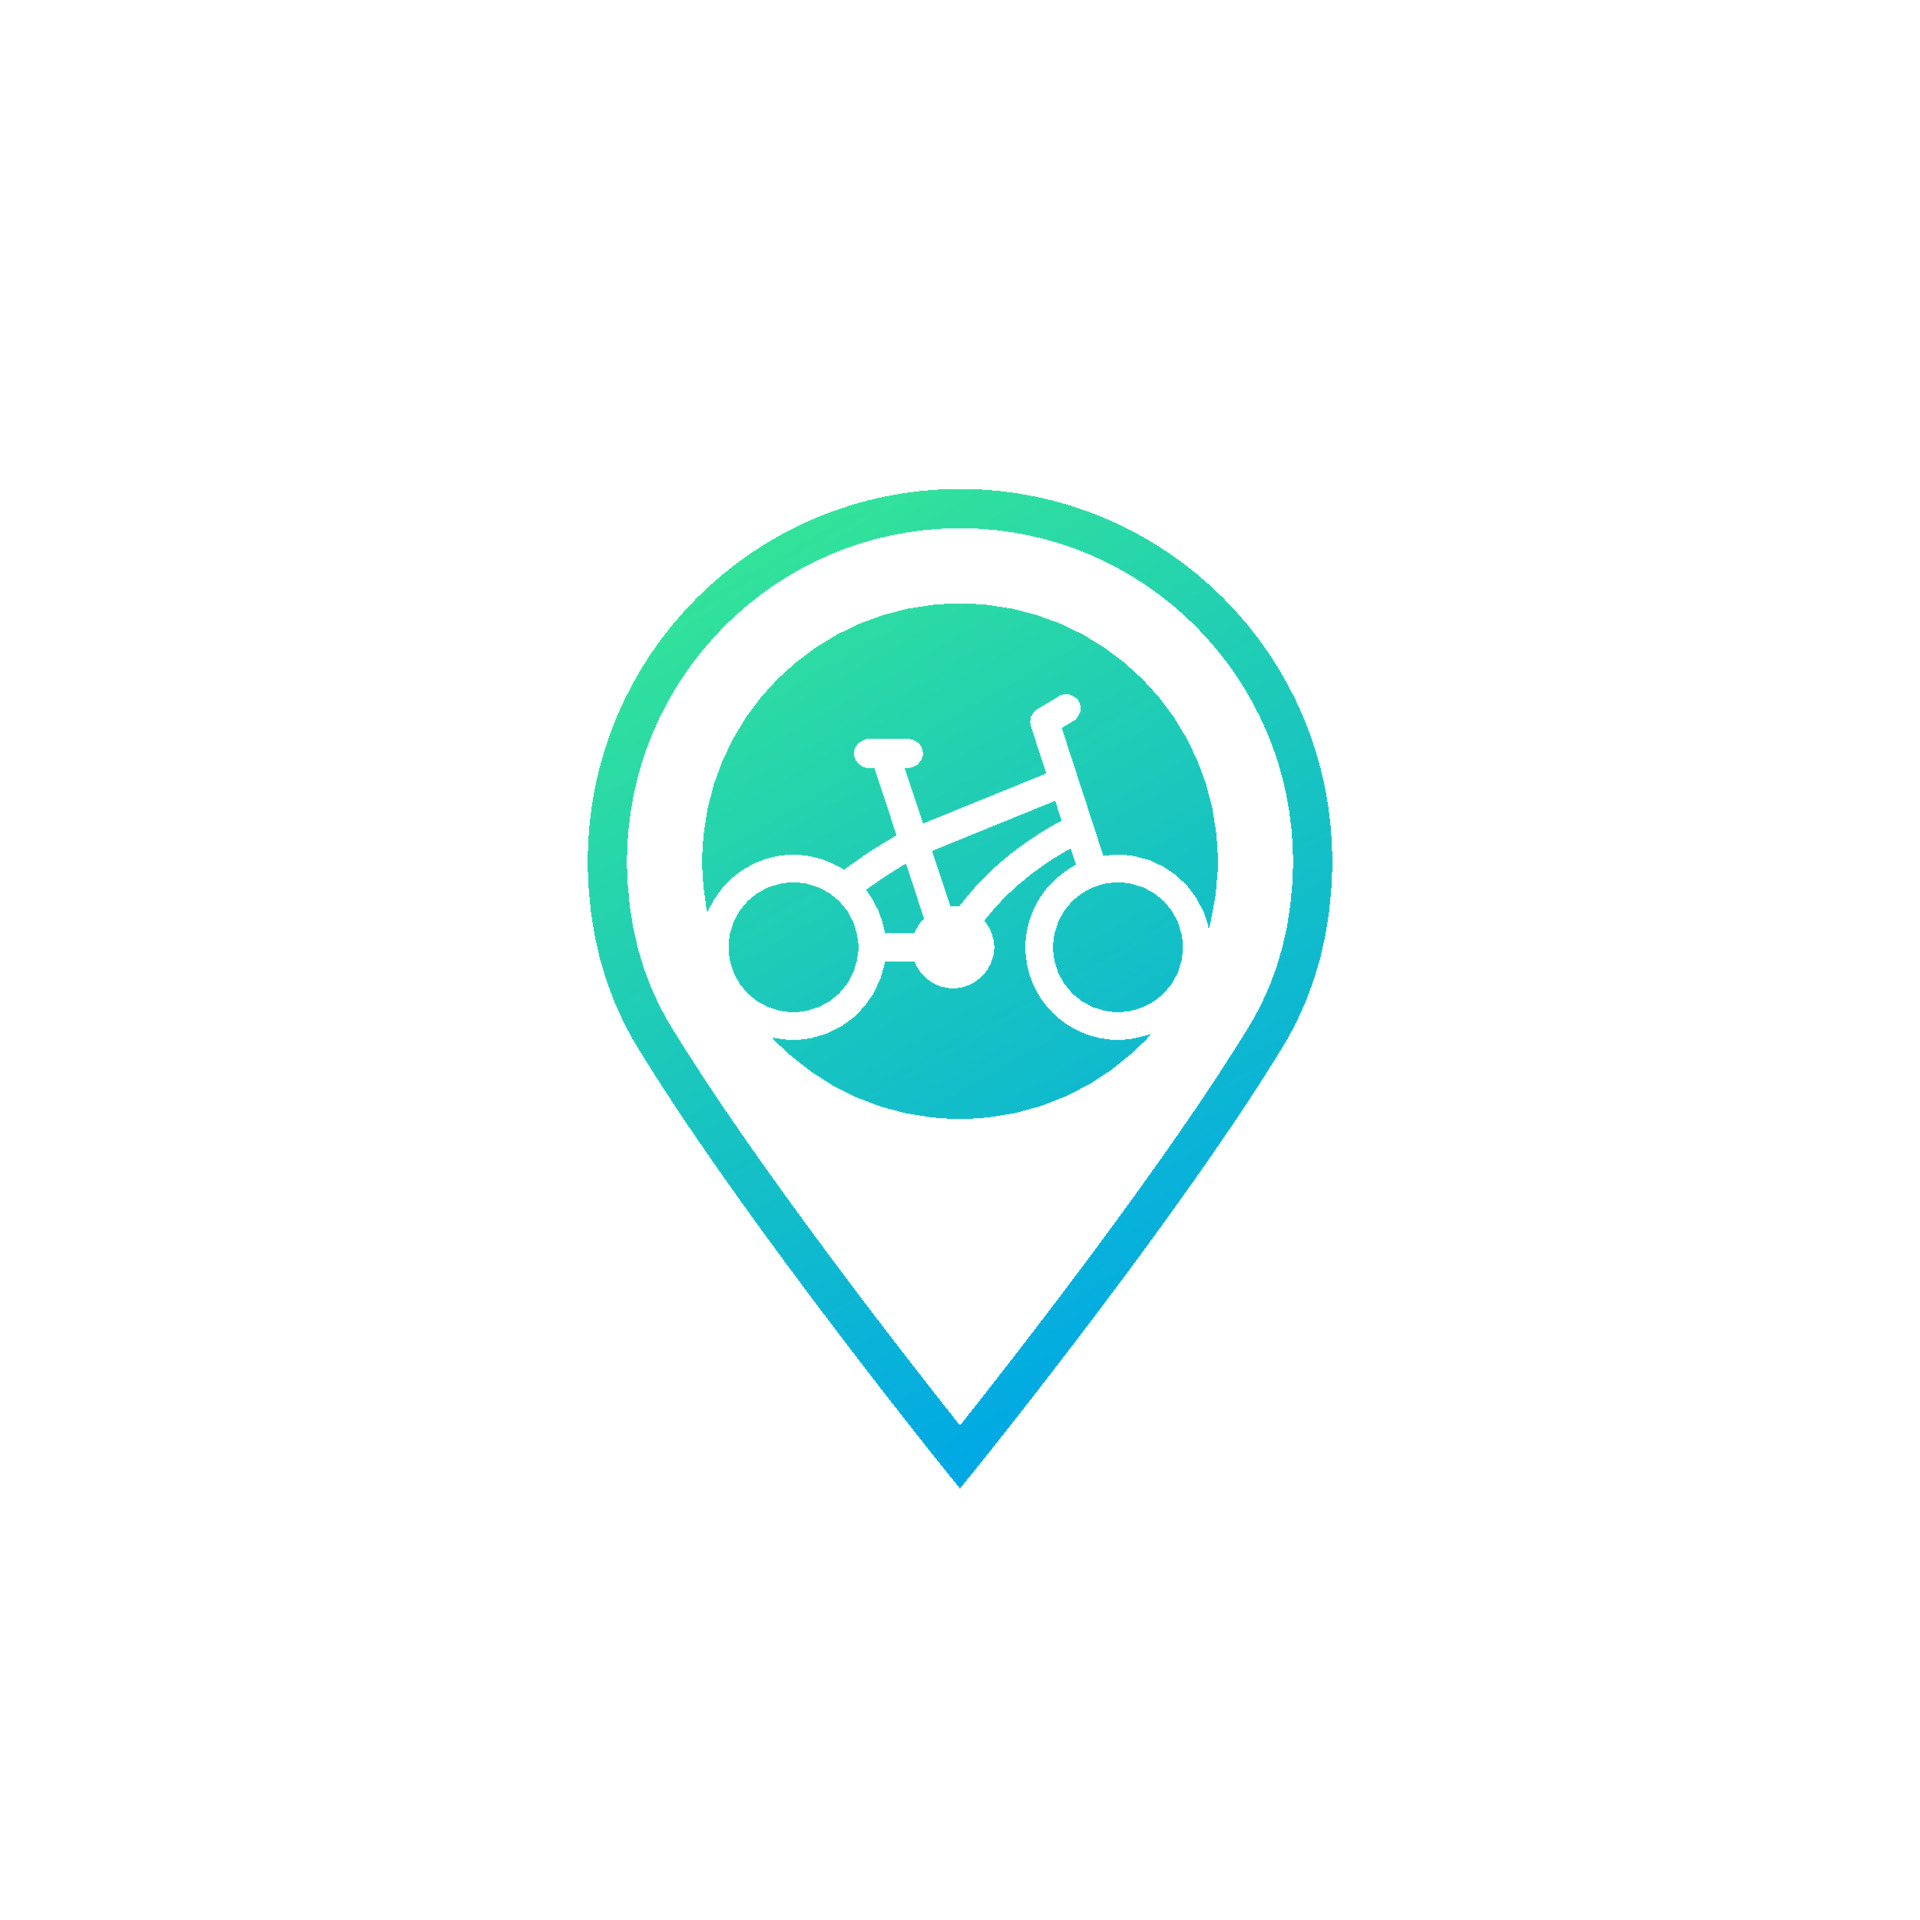 vecteezy_mark-with-a-bike-vector-logo_6960154-1